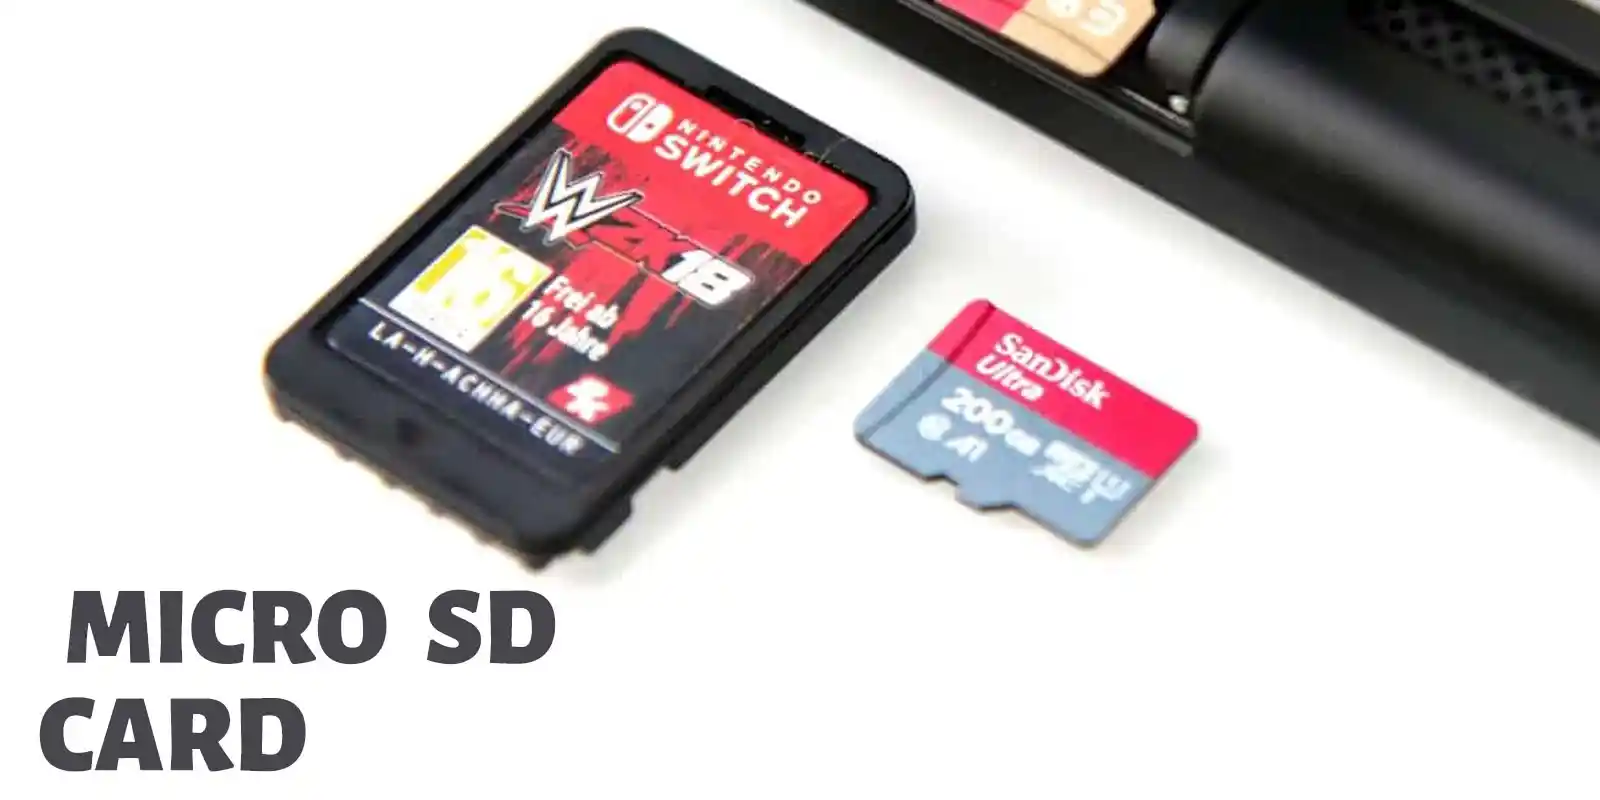 کارت حافظه Micro SD